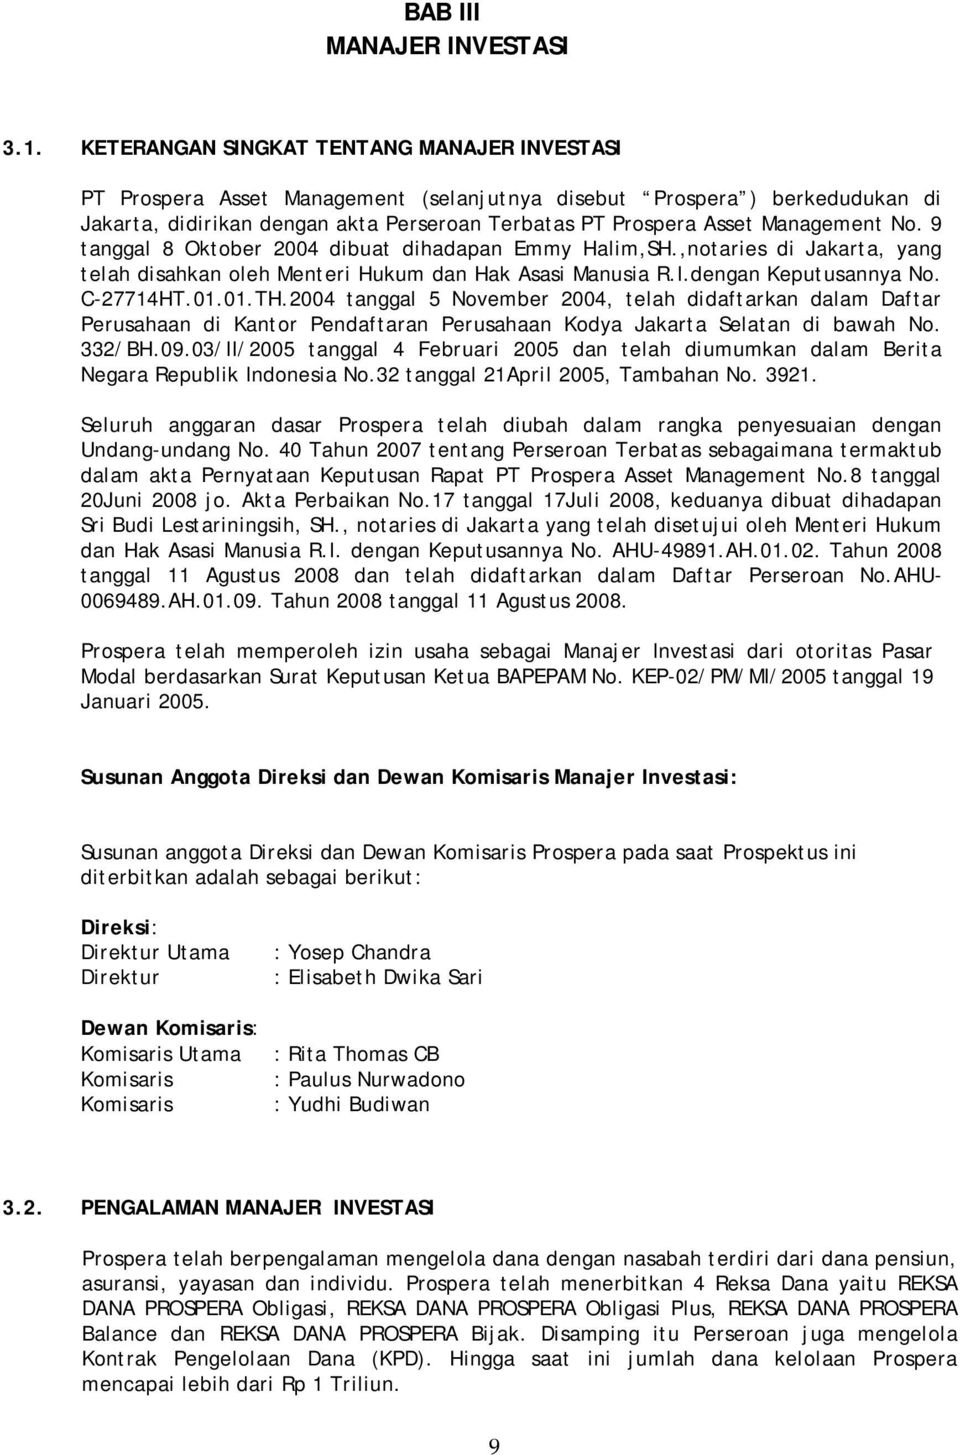 Management No. 9 tanggal 8 Oktober 2004 dibuat dihadapan Emmy Halim,SH.,notaries di Jakarta, yang telah disahkan oleh Menteri Hukum dan Hak Asasi Manusia R.I.dengan Keputusannya No. C-27714HT.01.01.TH.